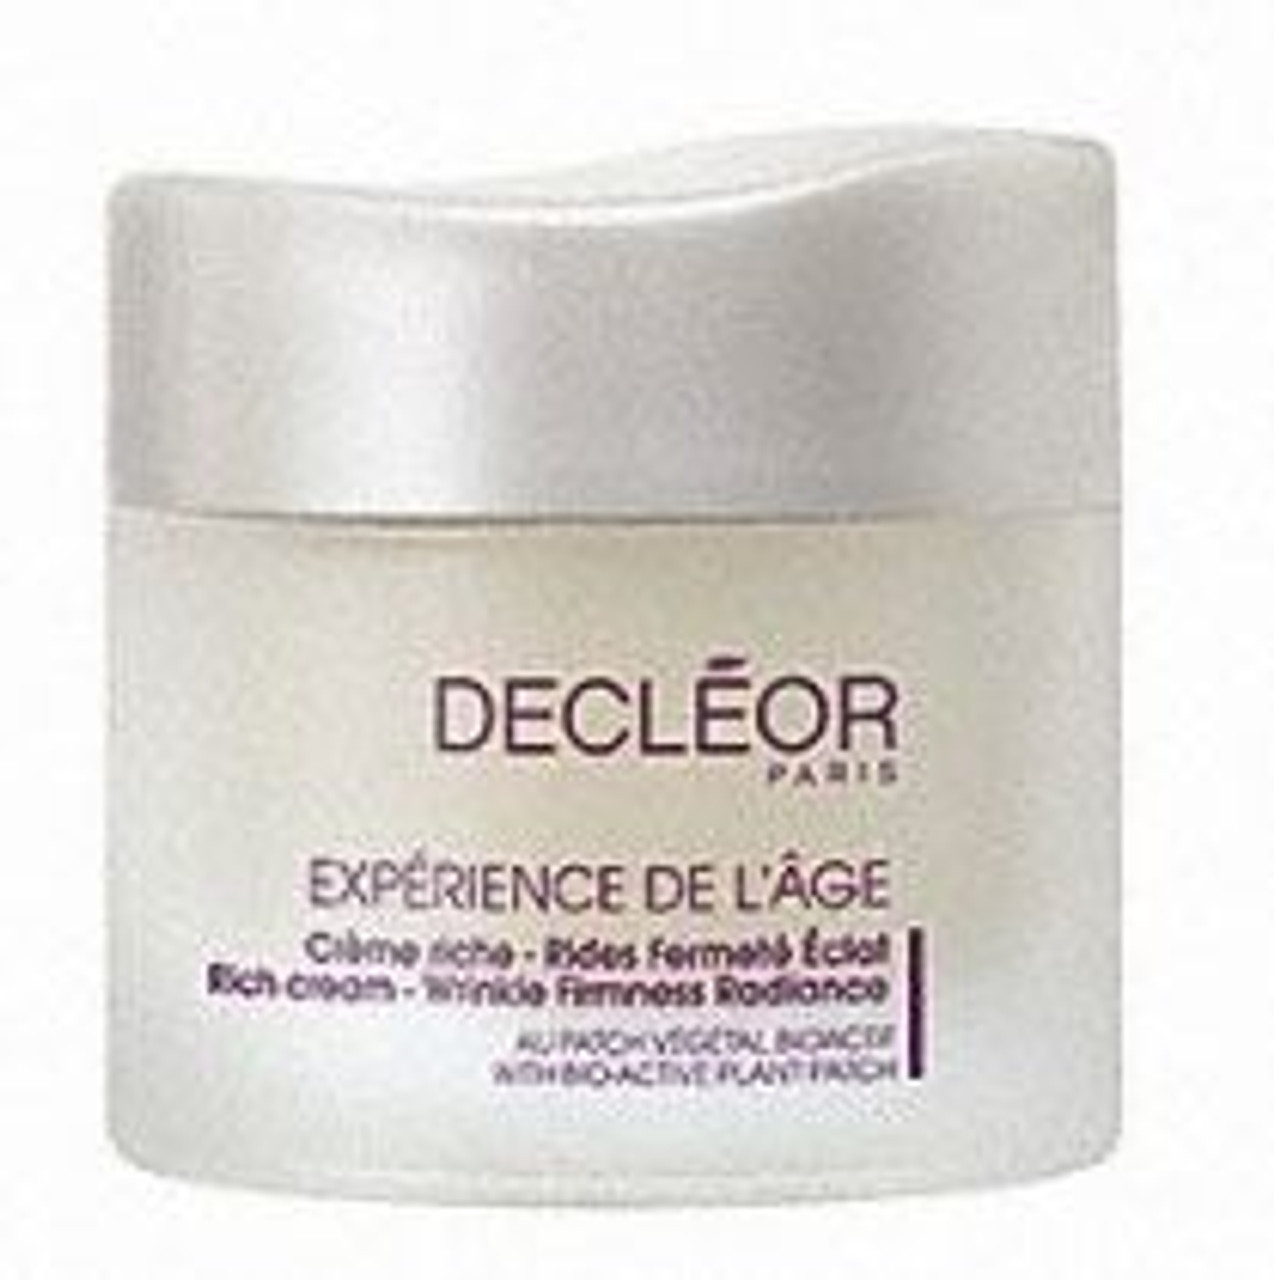 Decleor Experience De L'Age Rich Cream, 1.69